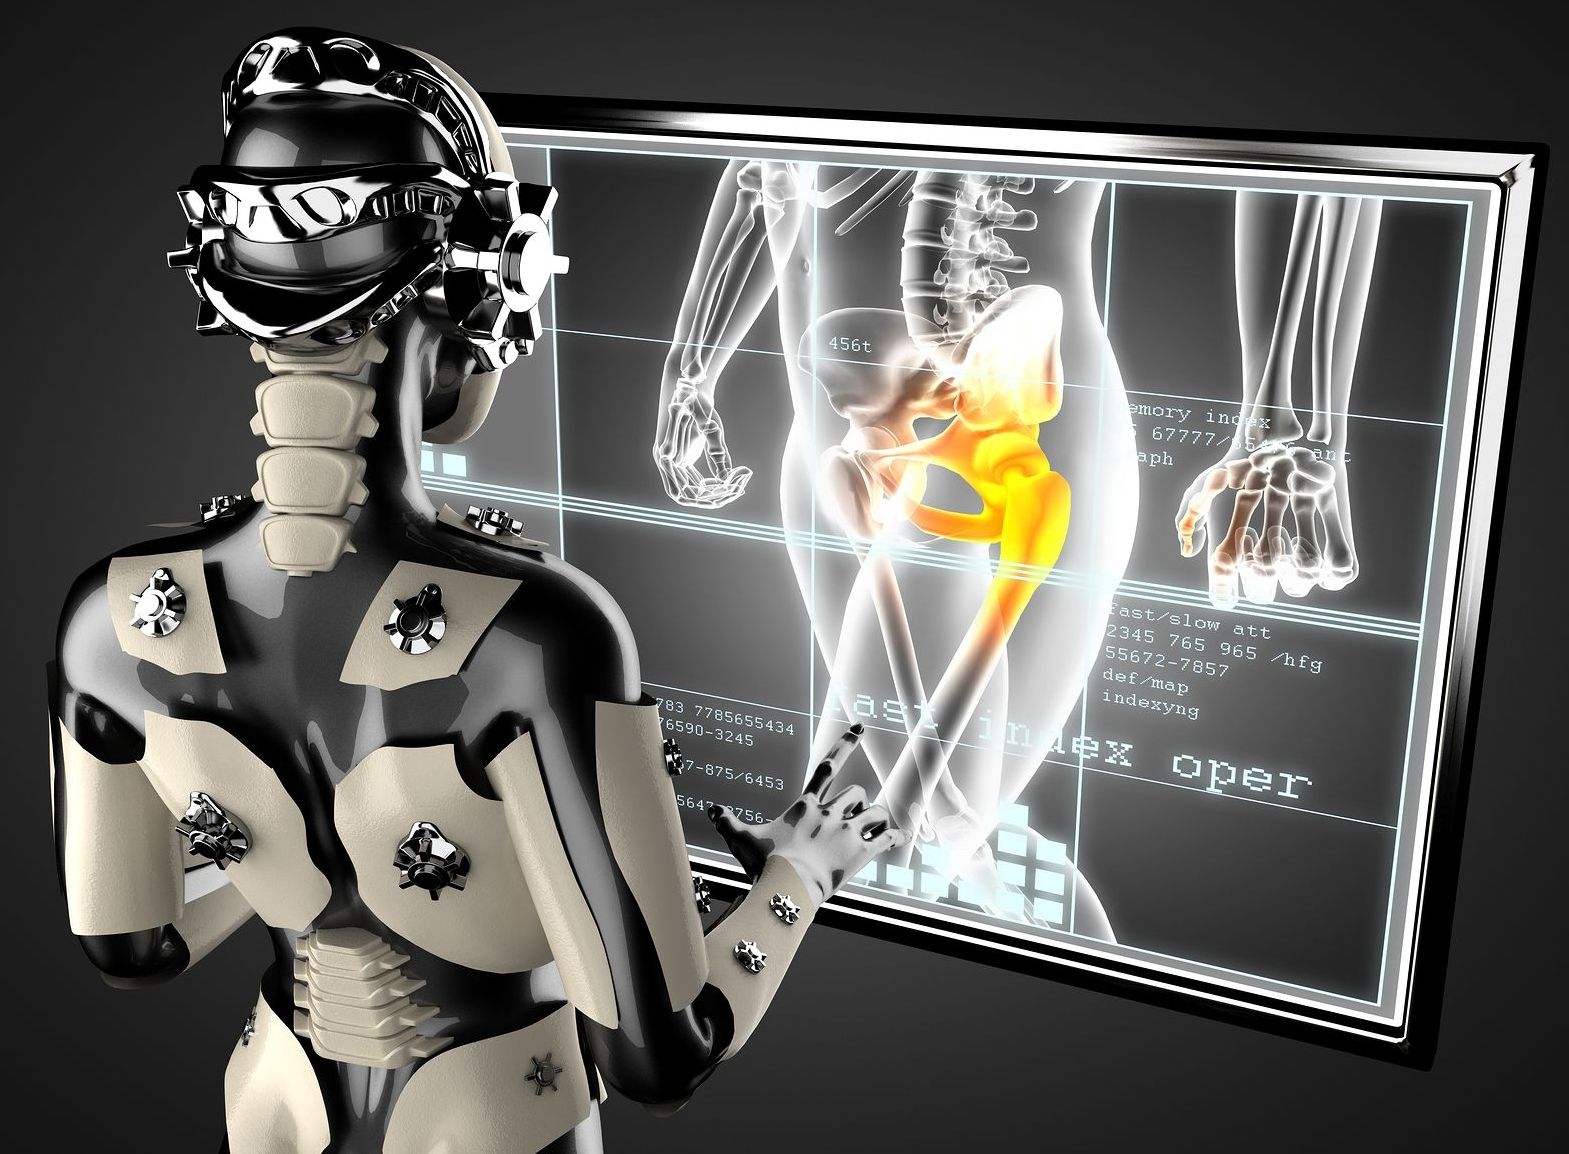 9 Artificial Intelligence Startups in Medical Imaging